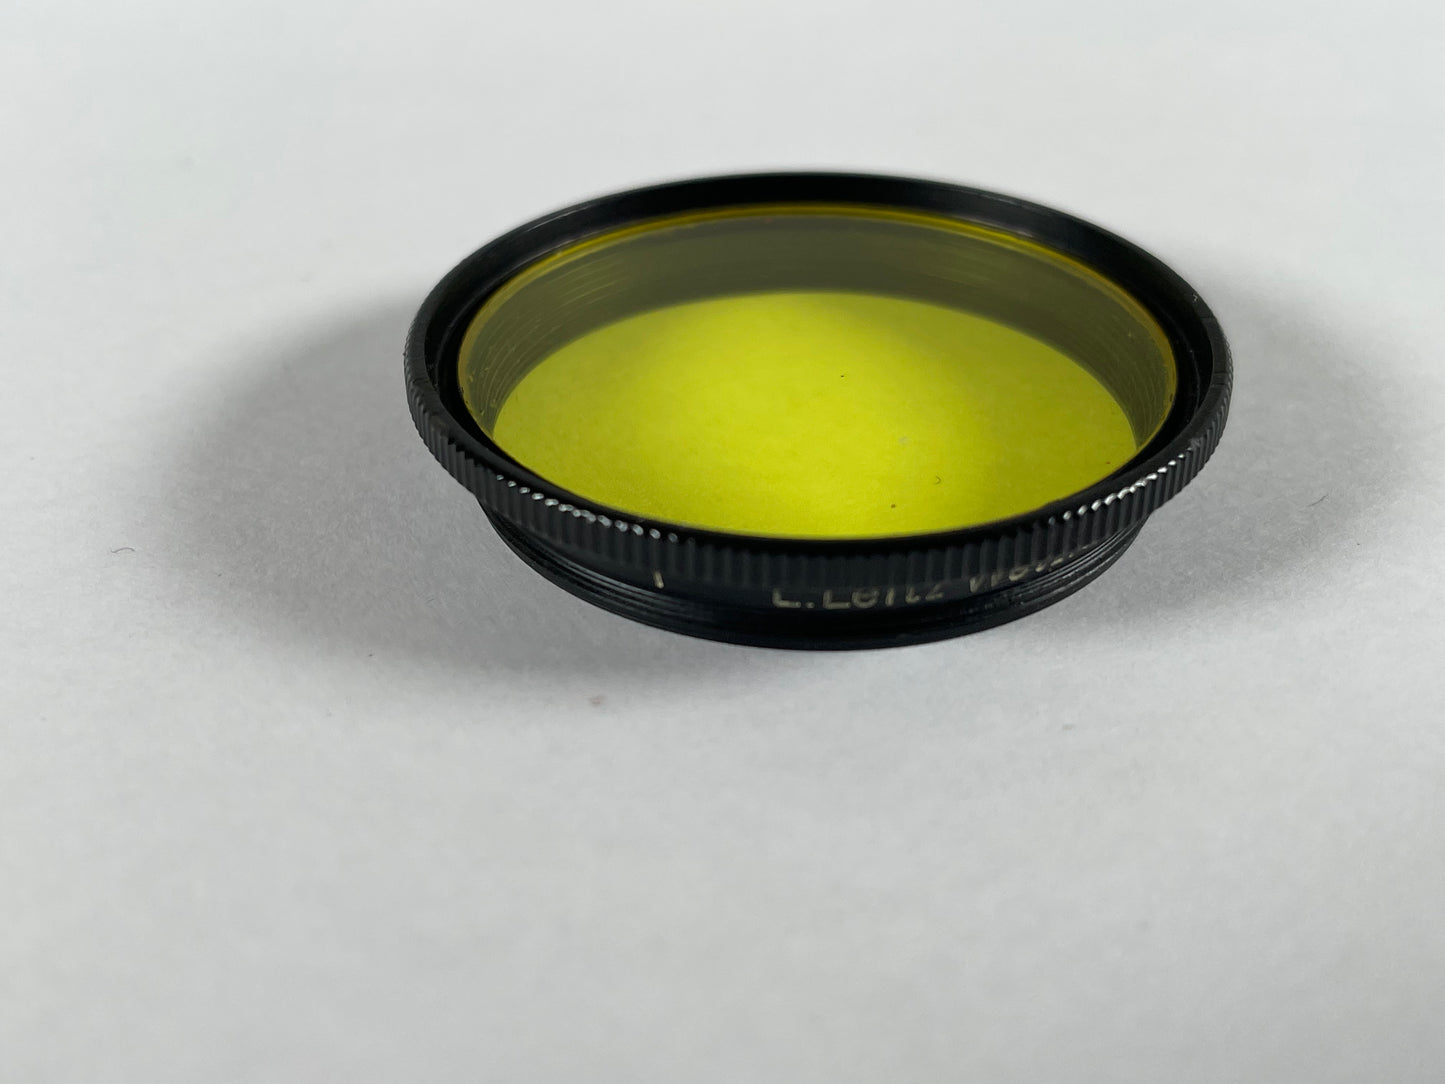 Leitz Leica Black E36 Yellow Y-1 Contrast Camera Lens Filter Summitar 36mm Thread